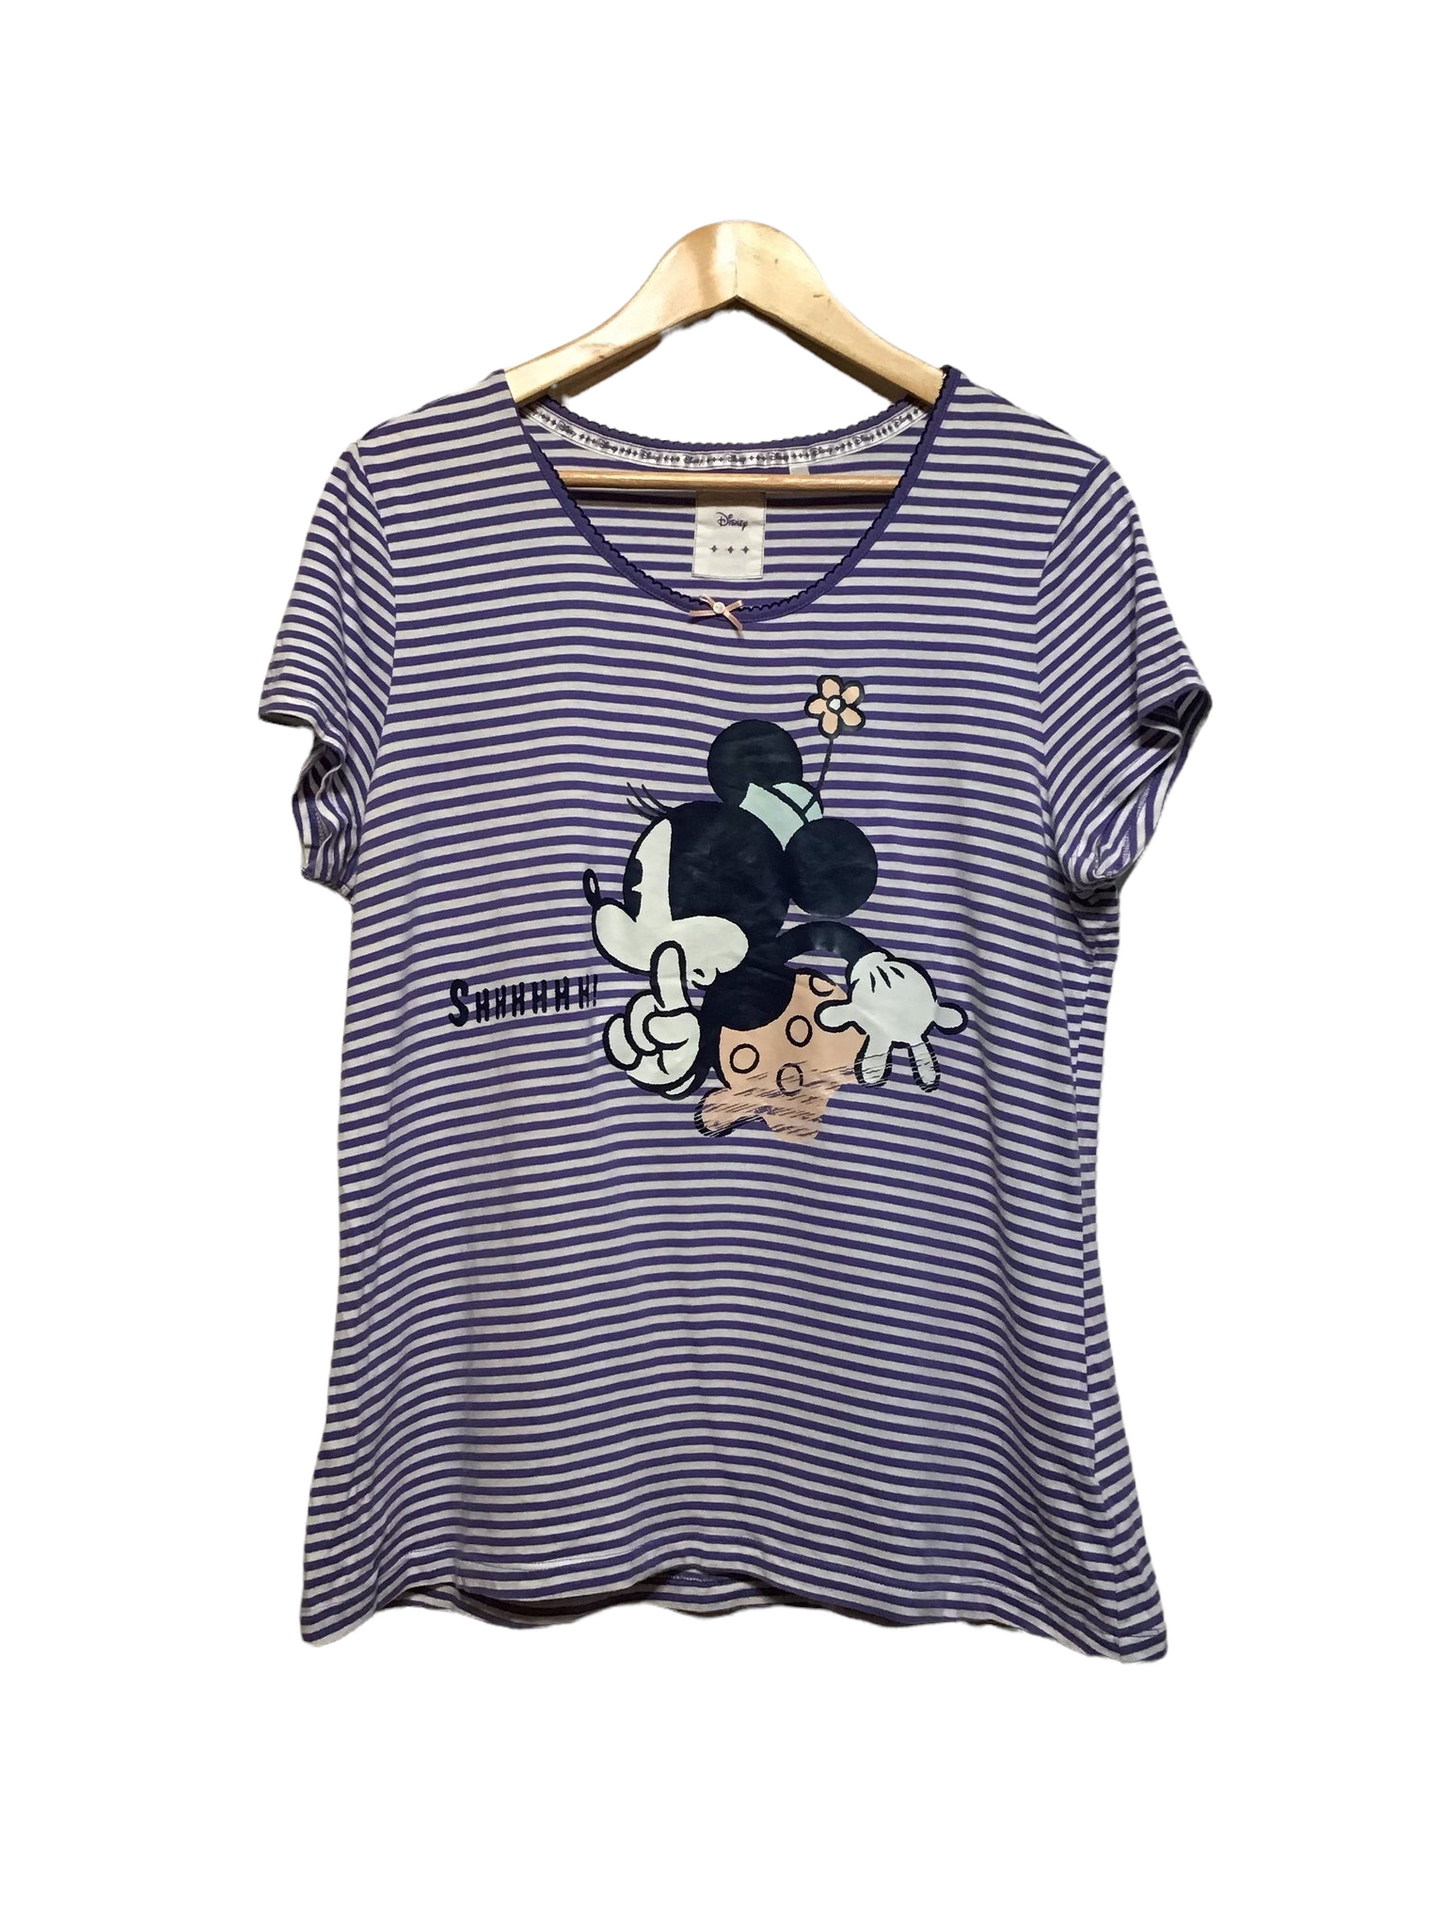 Disney Minnie Mouse Tee (Women’s Size L)